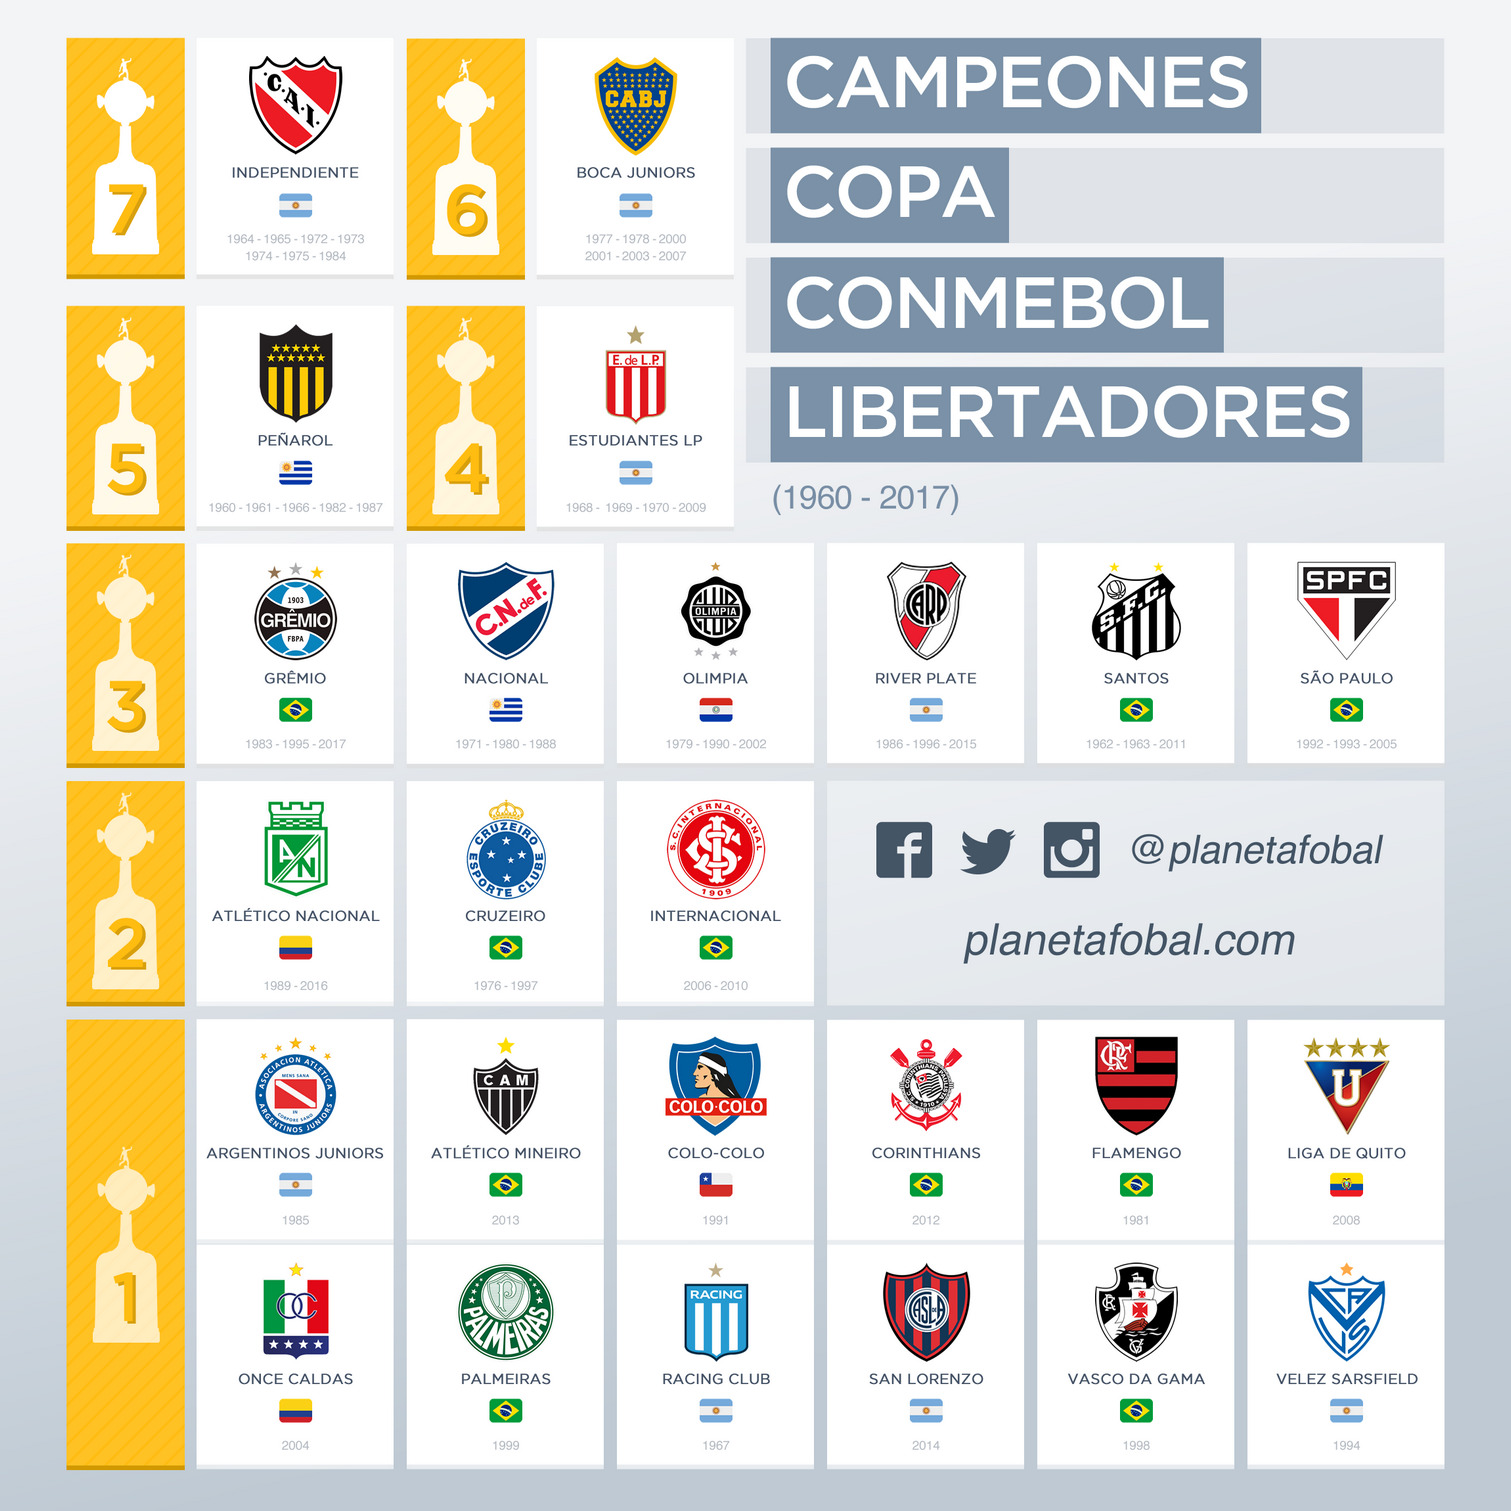 campeones-de-la-copa-libertadores-de-america-1960-2017.jpg